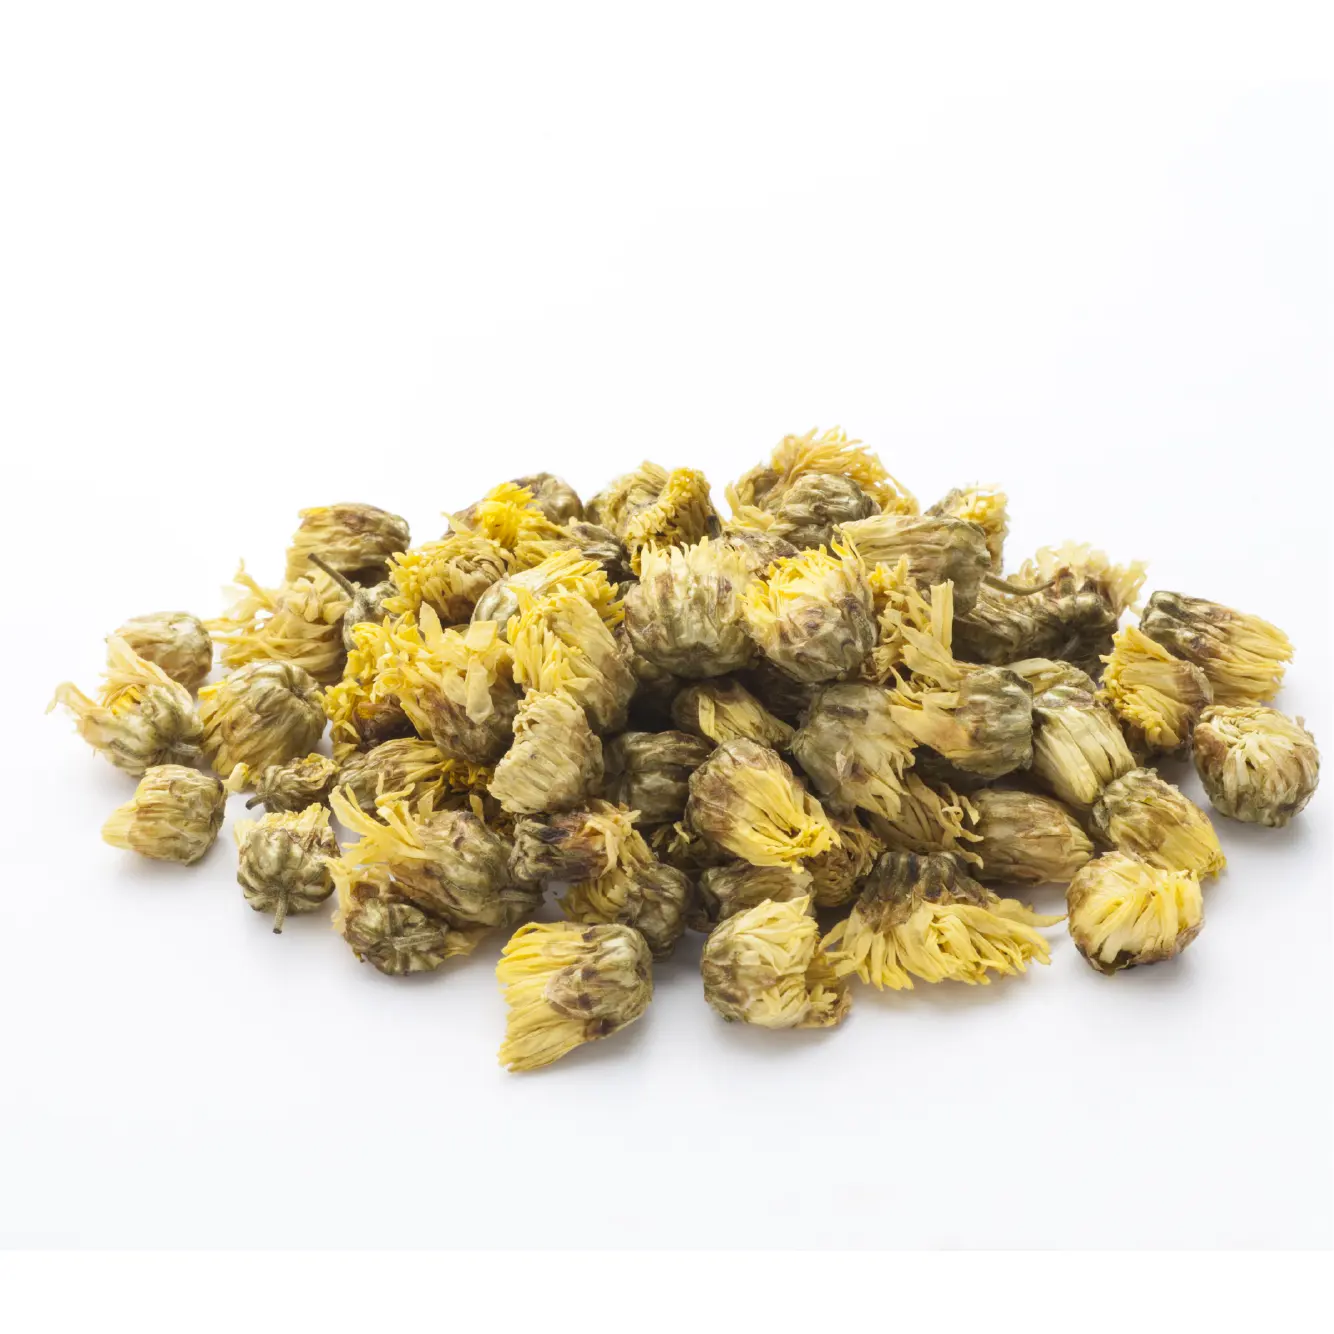 Organic Chyrsanthemum USDA & EU Organic Certified Premium Herbal Organic Dried Chrysanthemum Flower Tea From Thailand